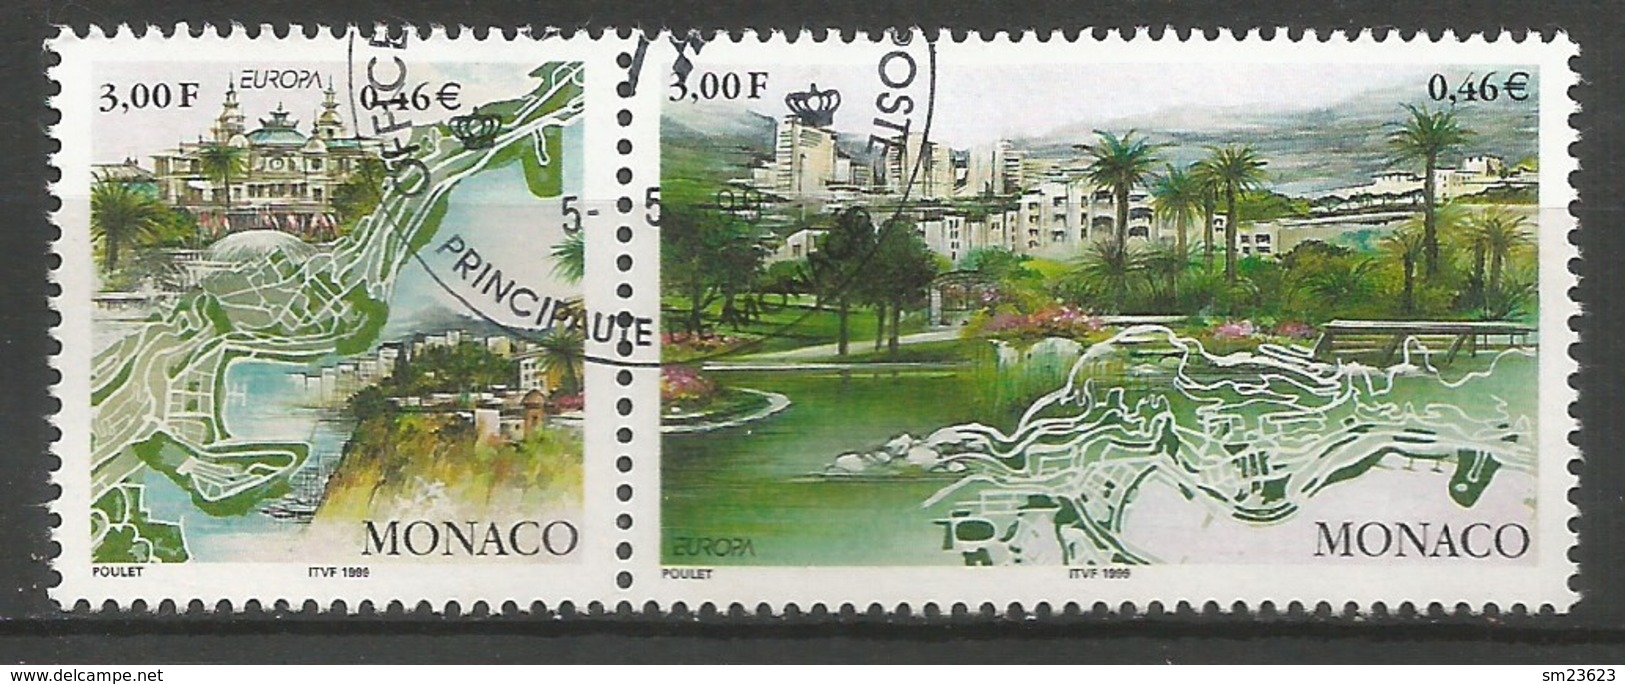 Monaco 1999 Mi.Nr. 2454 / 2455 , EUROPA CEPT Natur- Und Nationalparks - Gestempelt / Fine Used / (o) - 1999